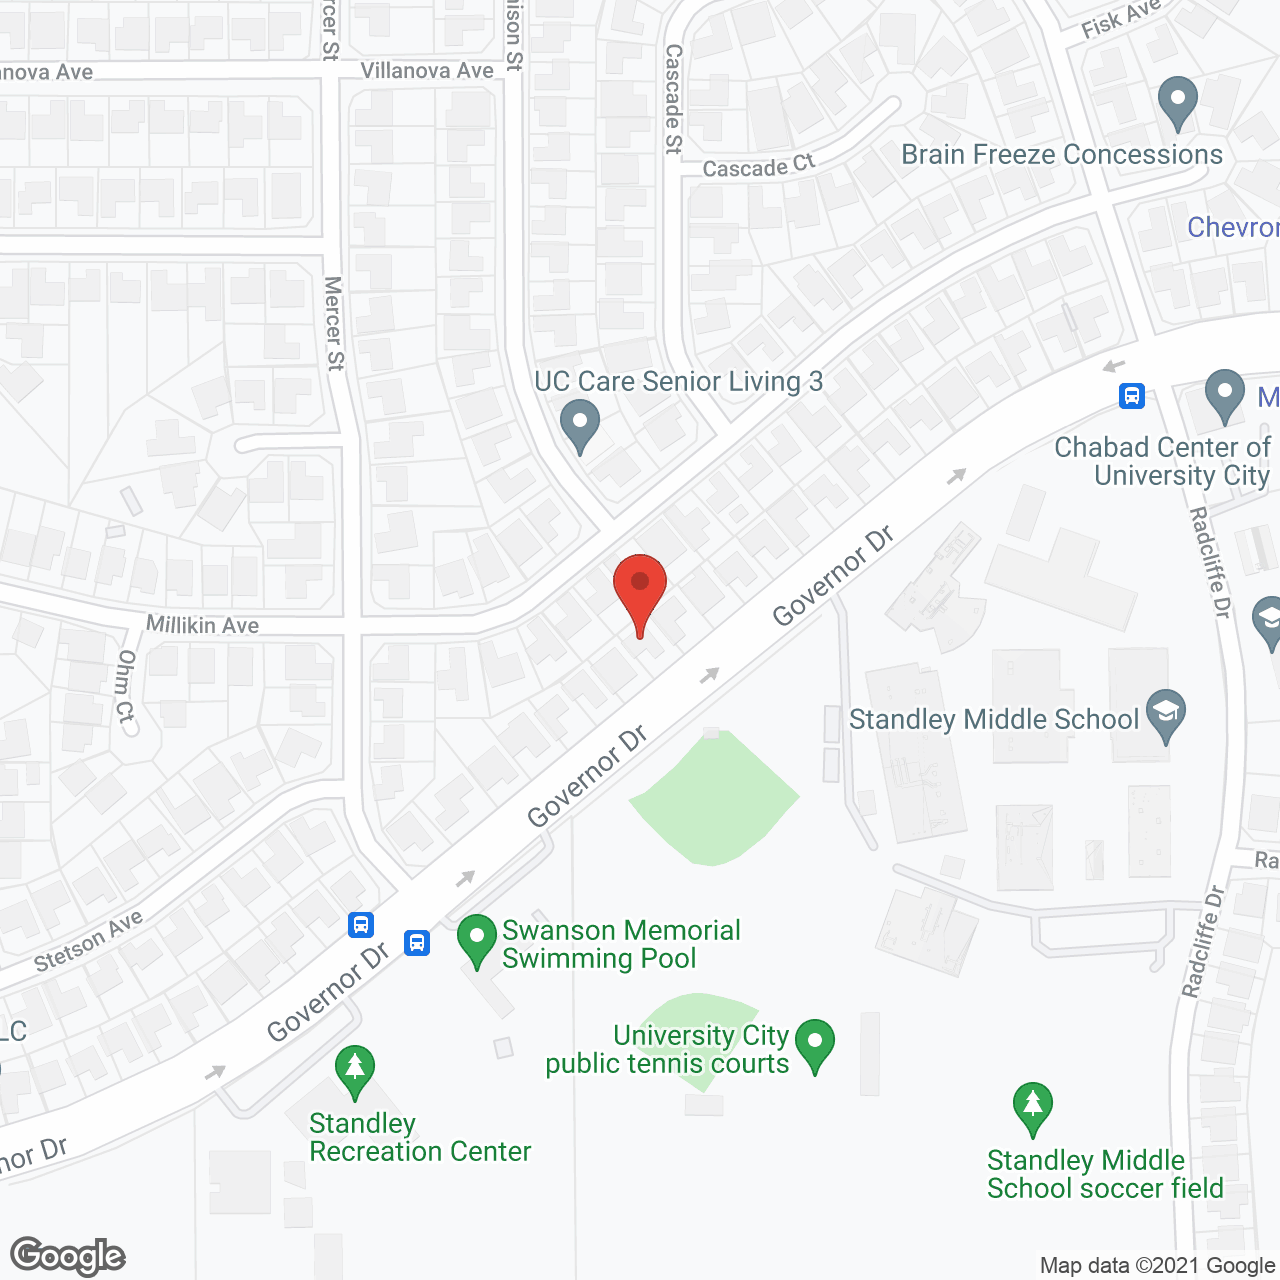 Santa Martha Residential VII in google map